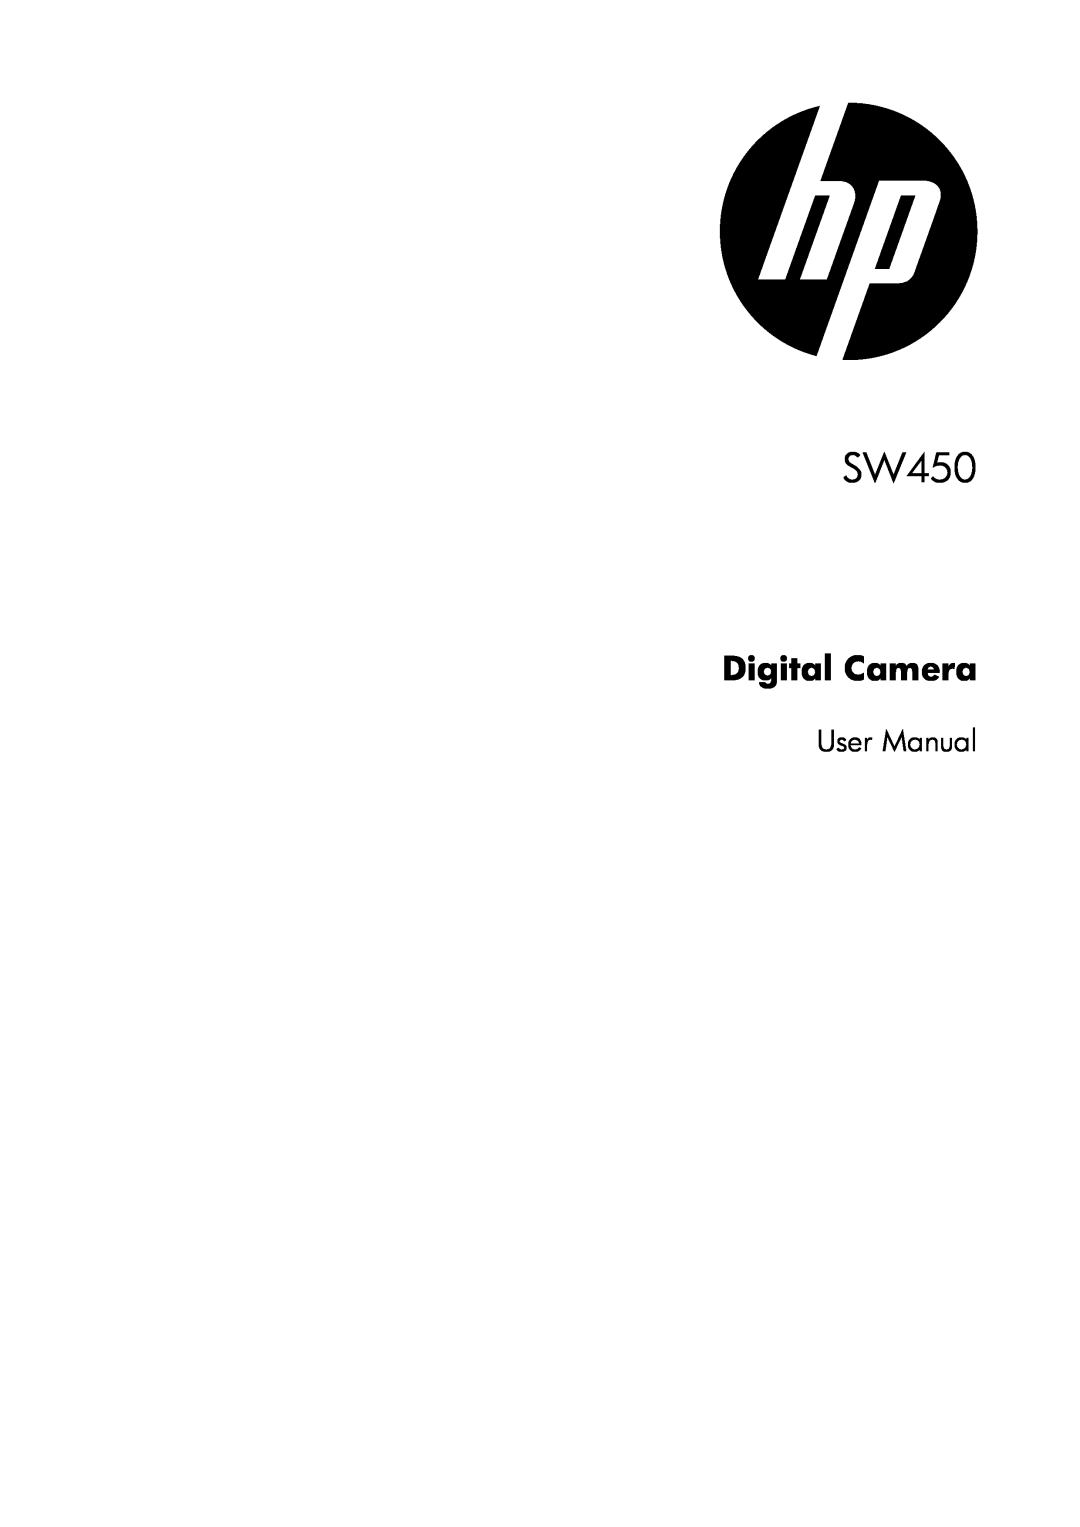 HP SW450 manual Digital Camera, User Manual 